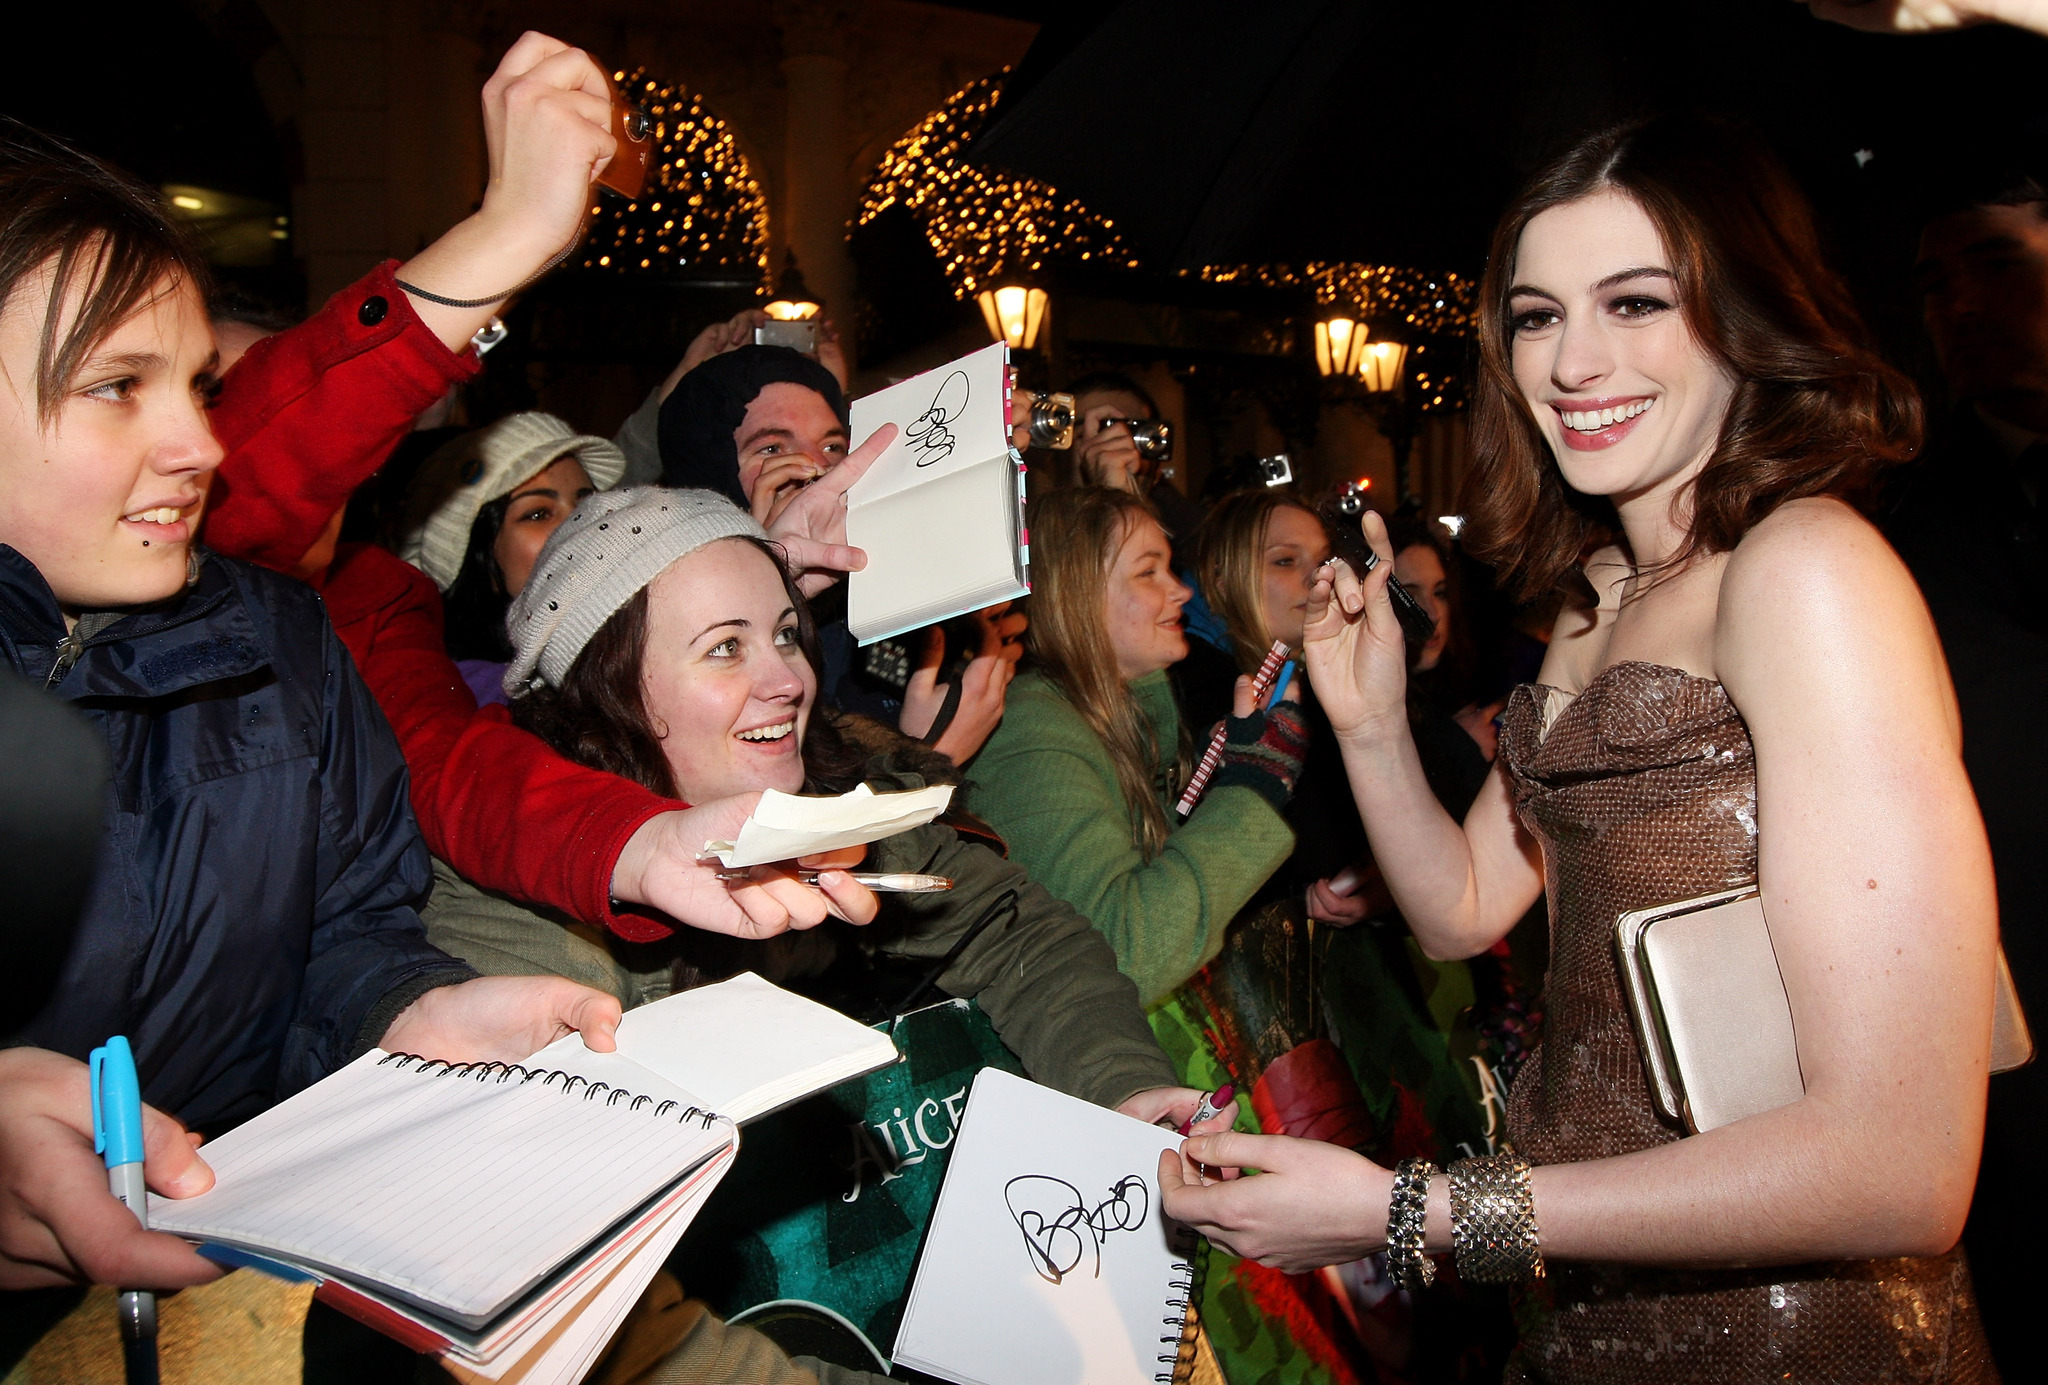 Anne Hathaway at event of Alisa stebuklu salyje (2010)